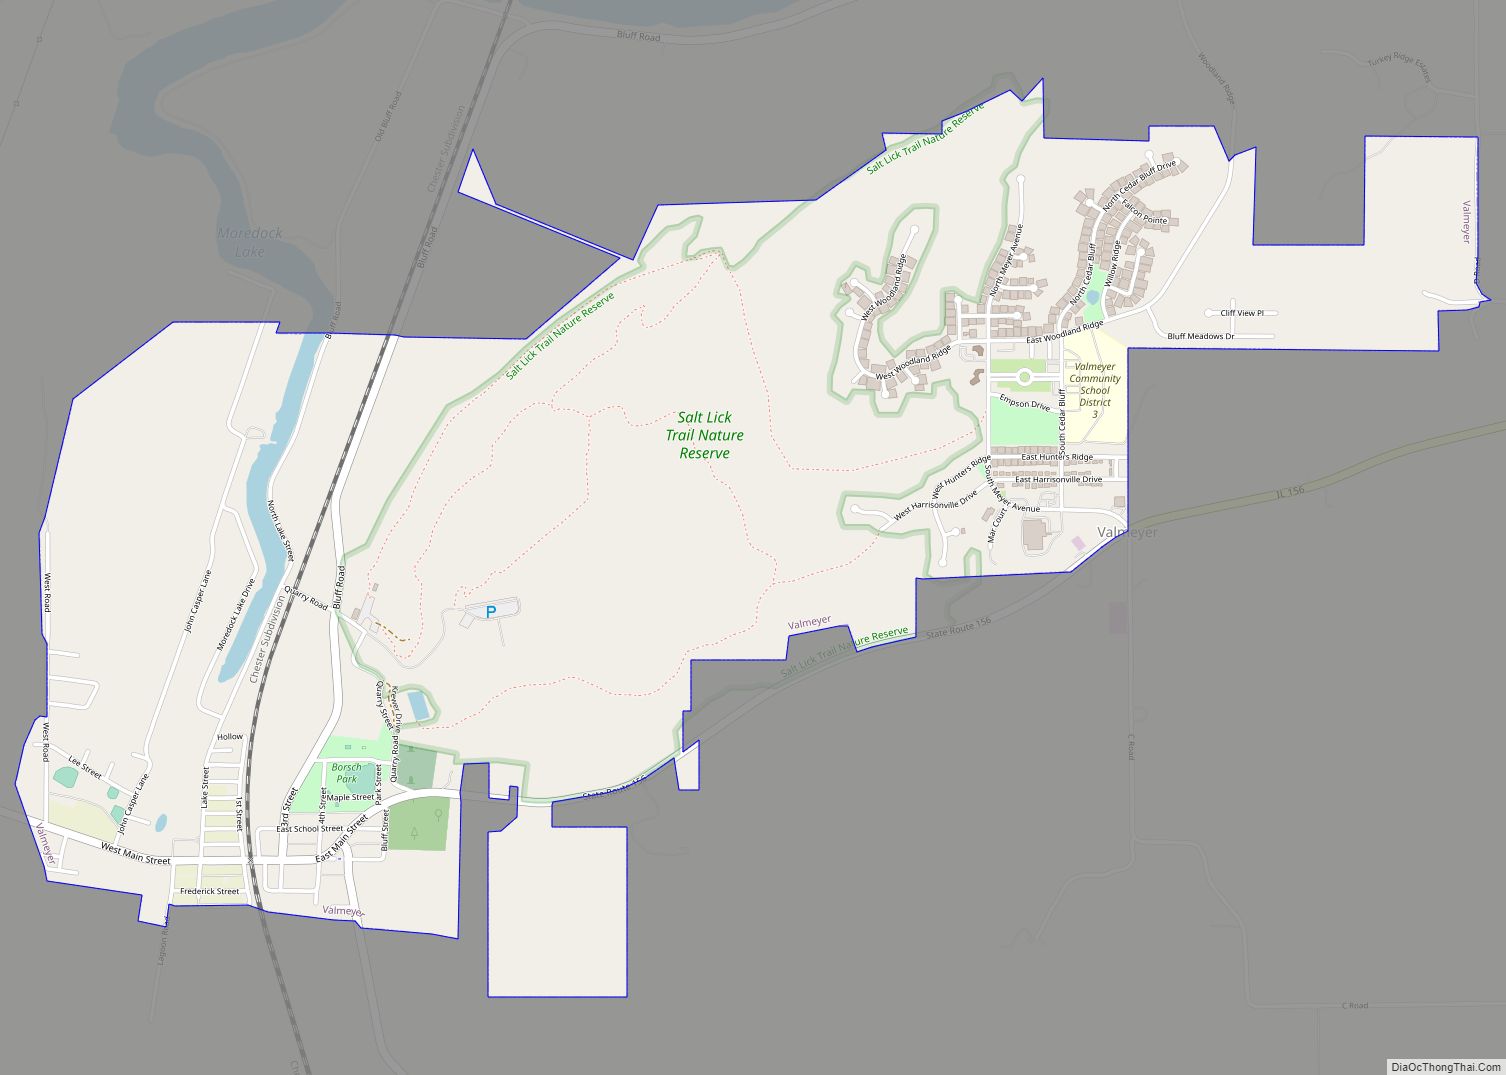 Map of Valmeyer village